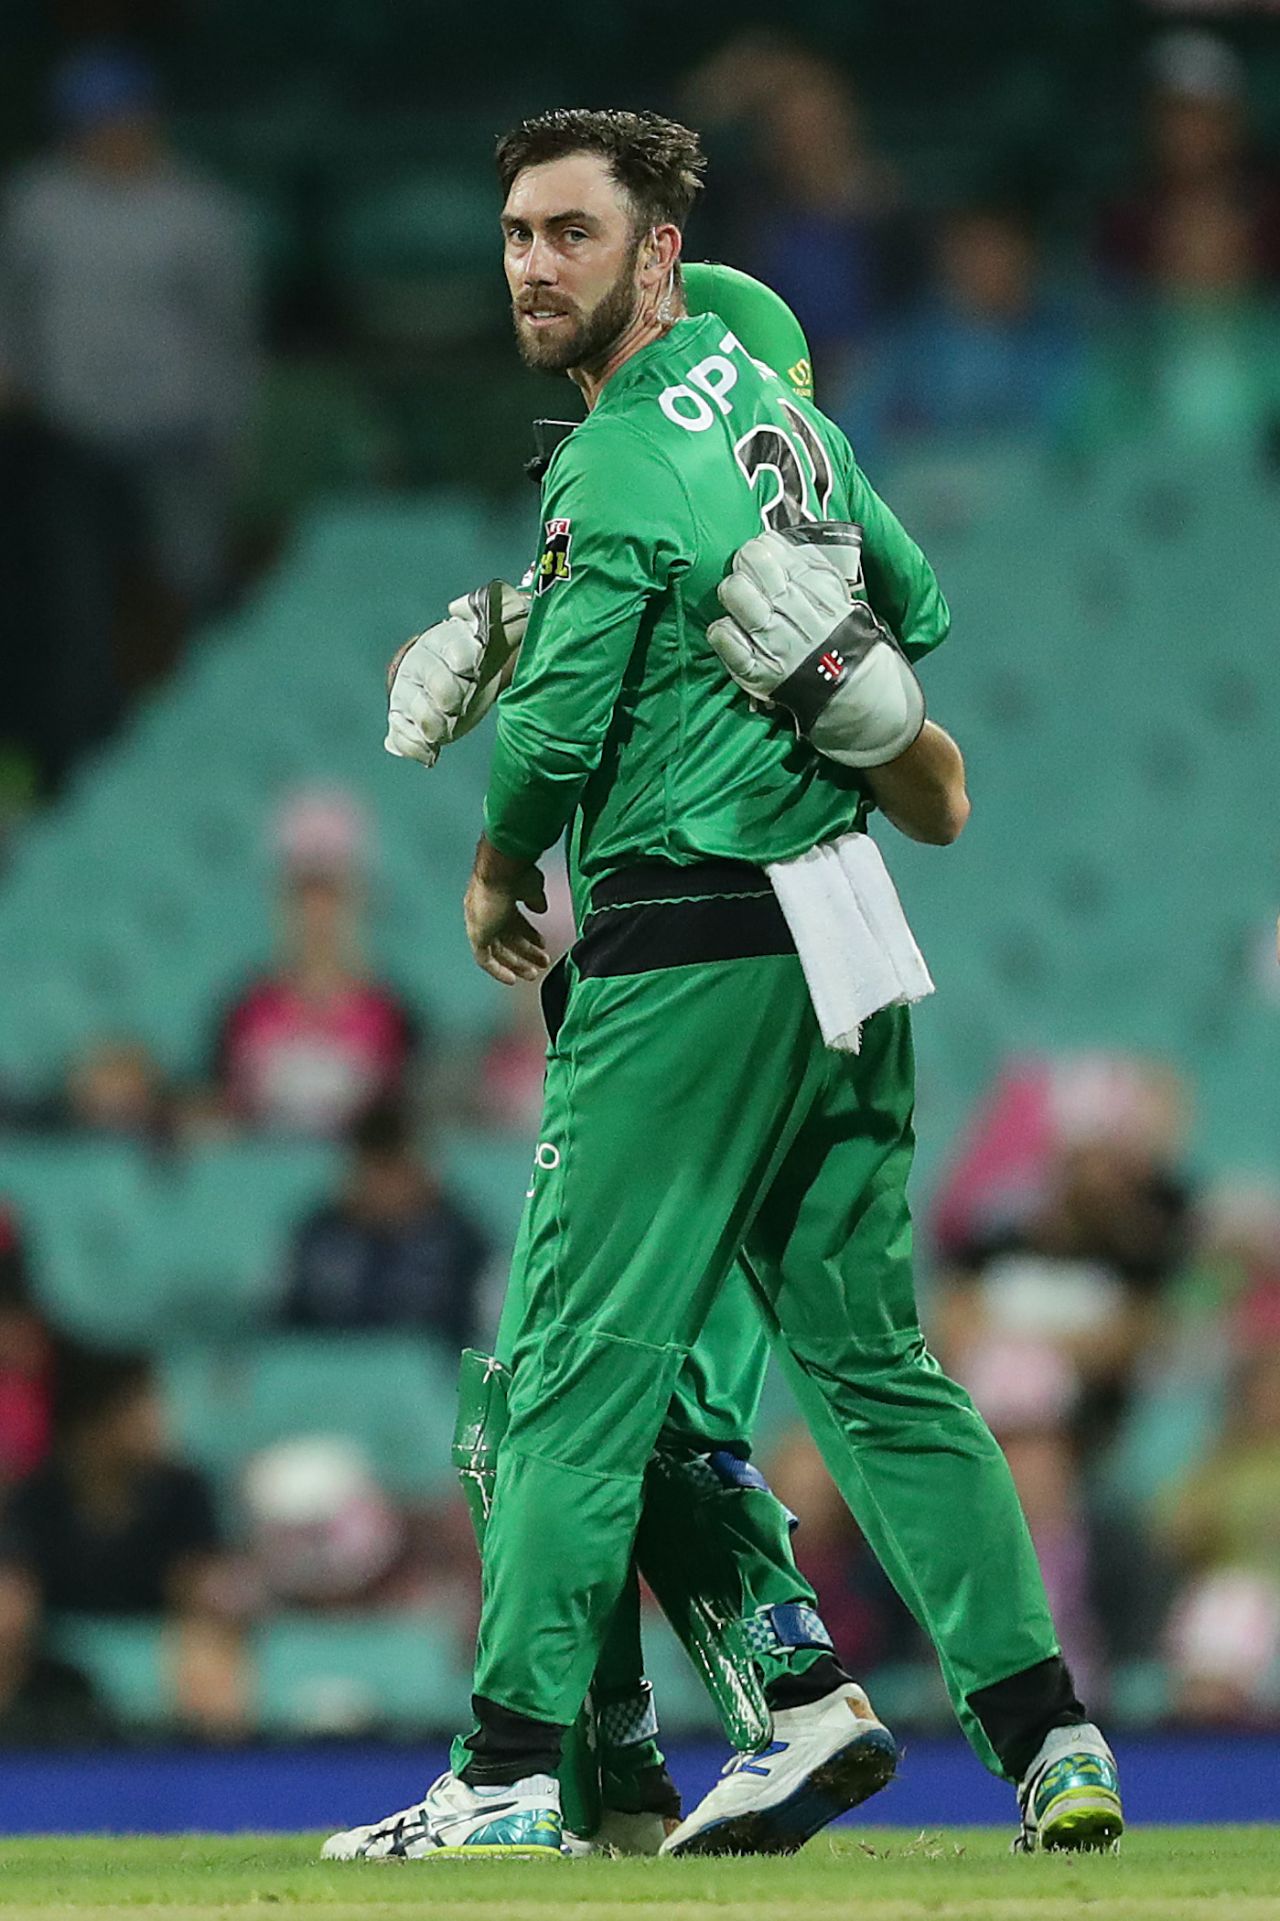 Glenn Maxwell celebrates a wicket, Sydney Sixers v Melbourne Stars, BBL 09 final, Sydney, February 8, 2020